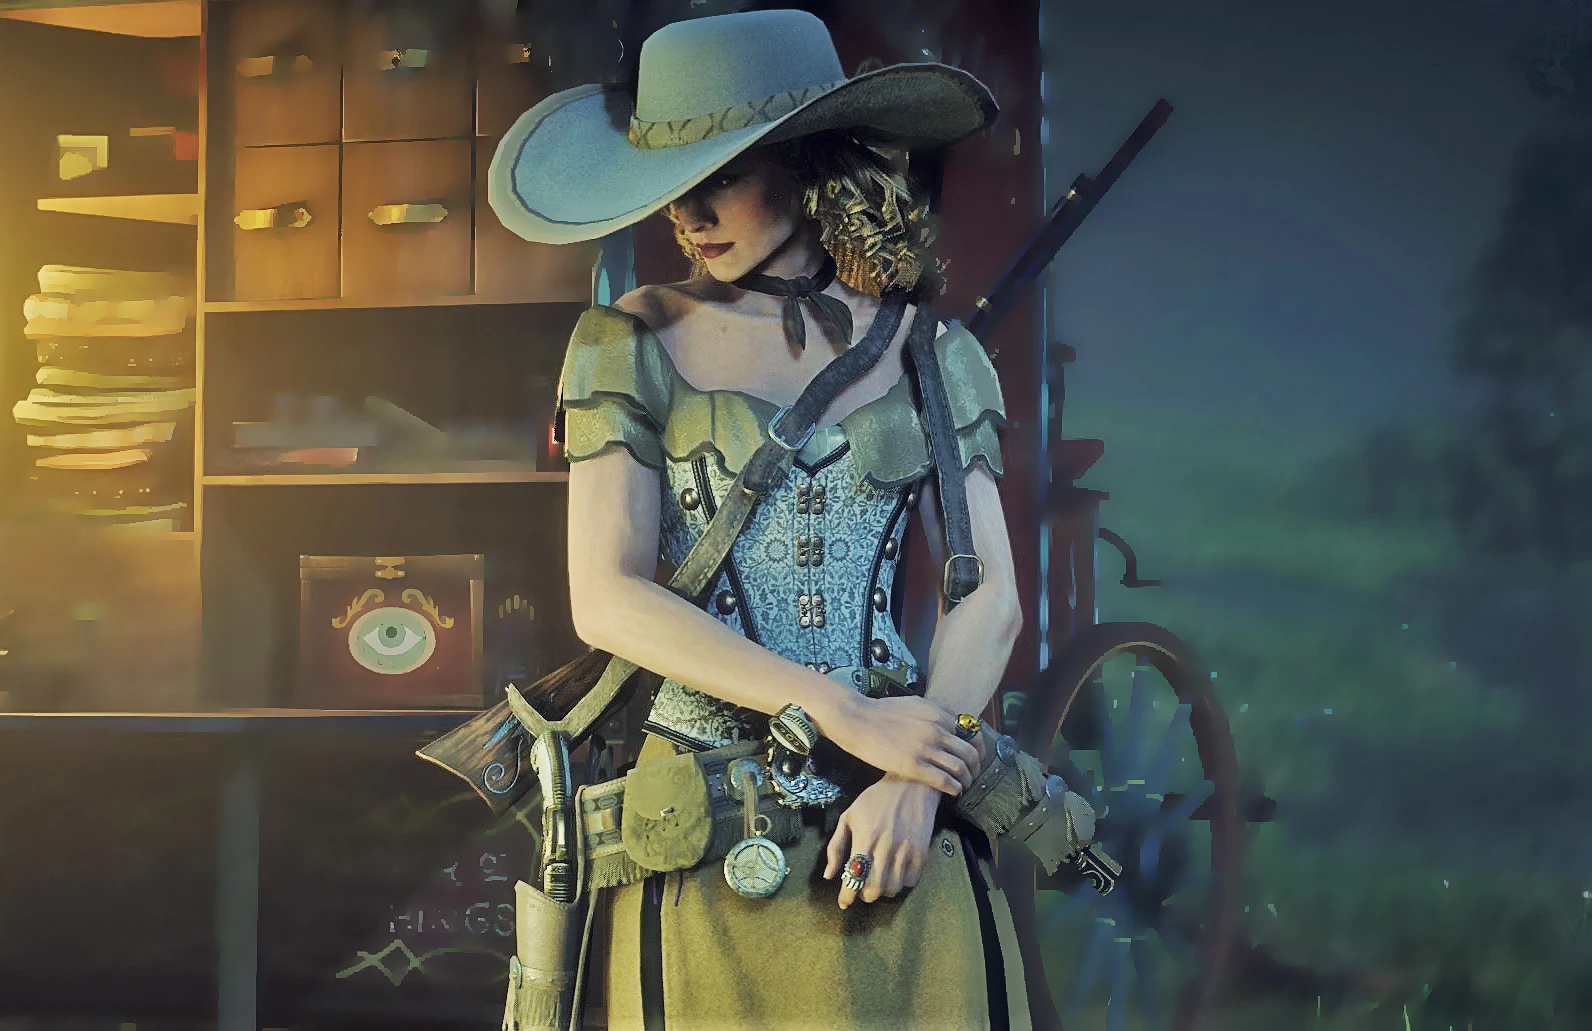 Elegant Suit at Red Dead Redemption 2 Nexus - Mods and community